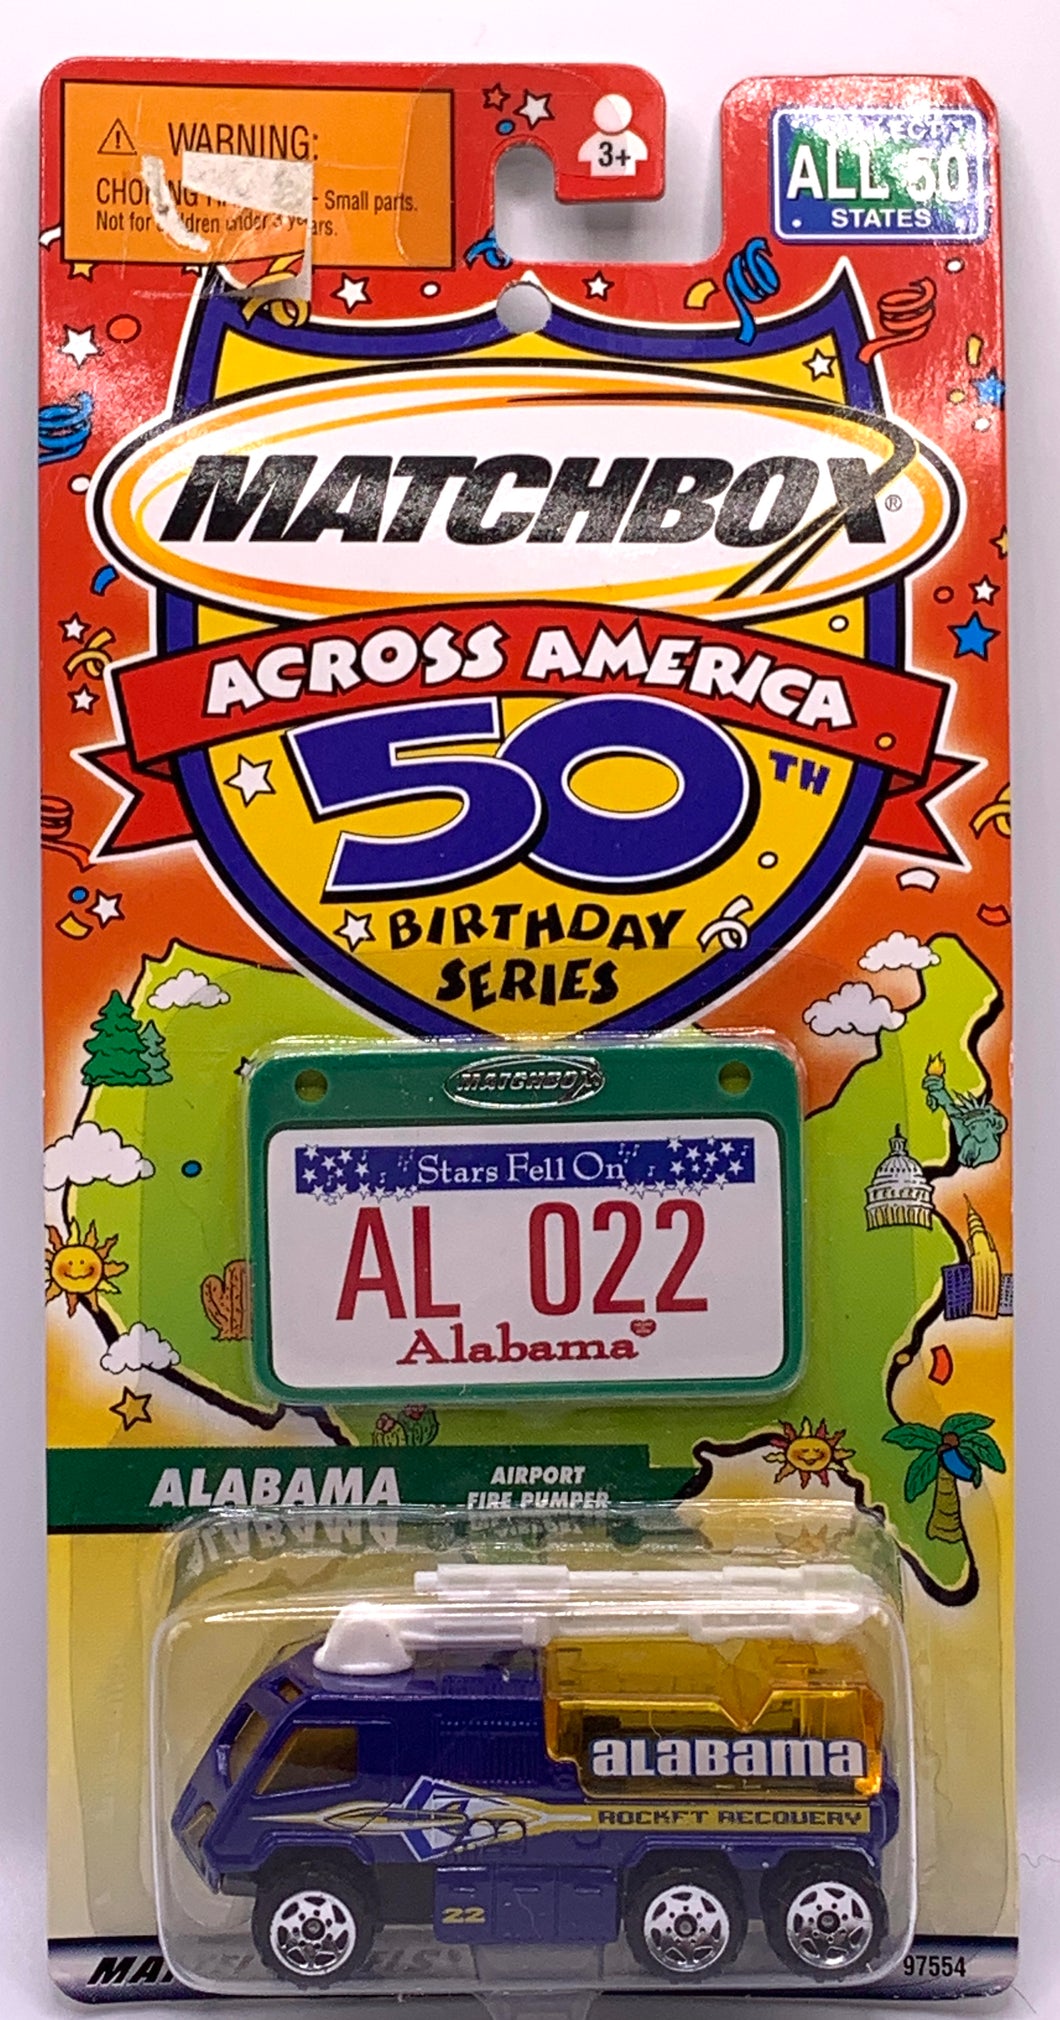 ALABAMA Rocket Recovery Matchbox Across America 50th Birthday Series